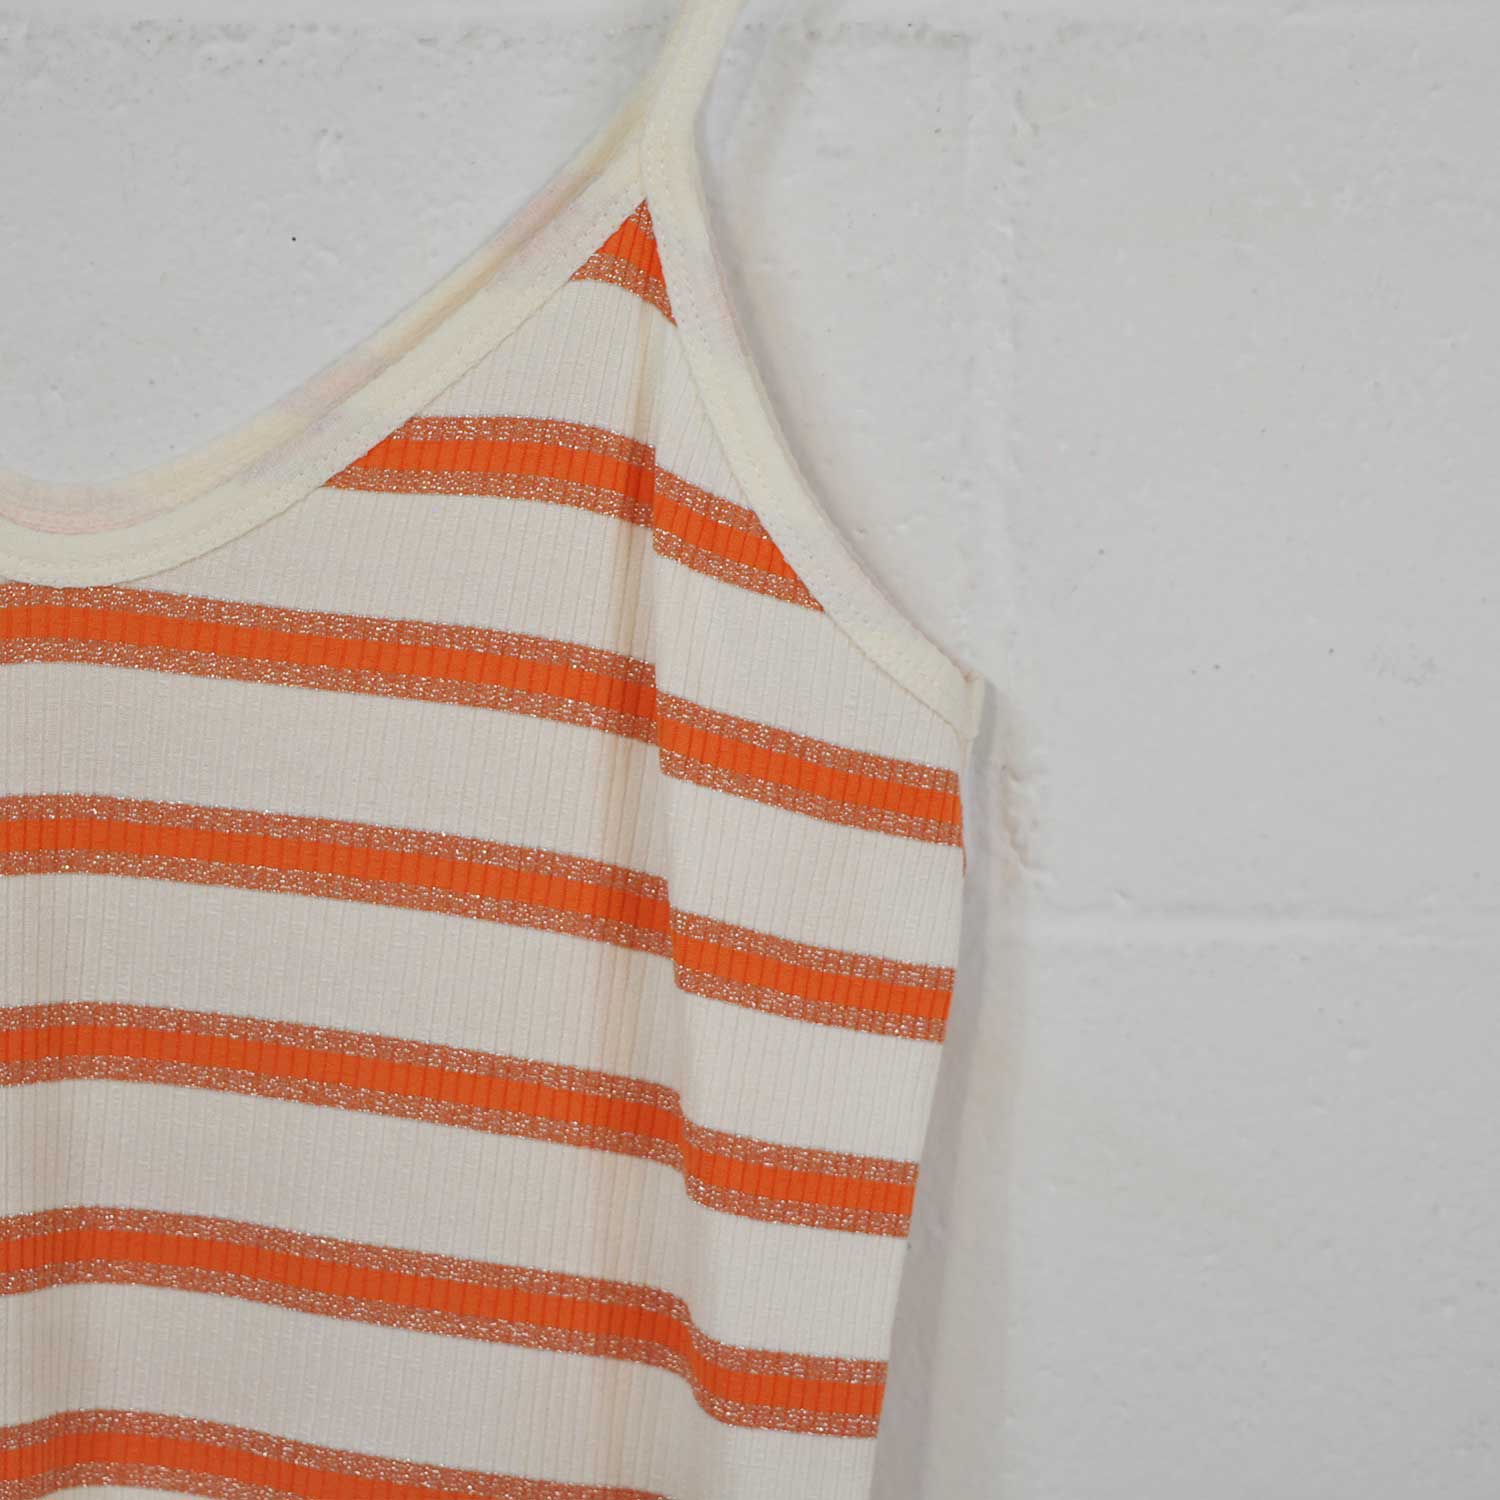 Orange shiny stripes dress